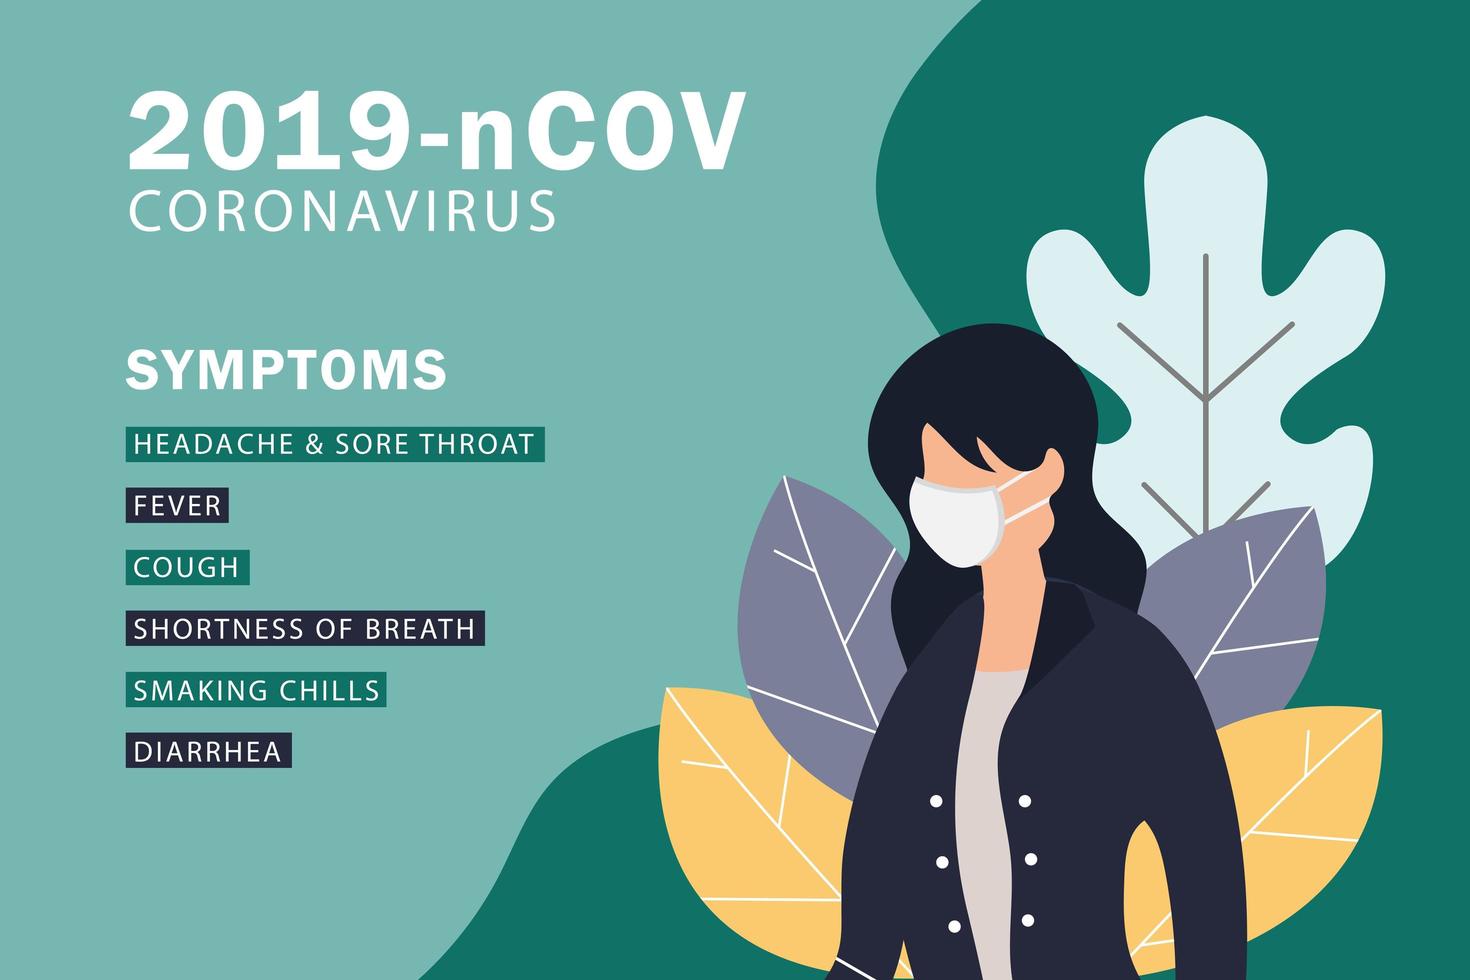 diseño de coronavirus covid-19 o 2019-ncov vector